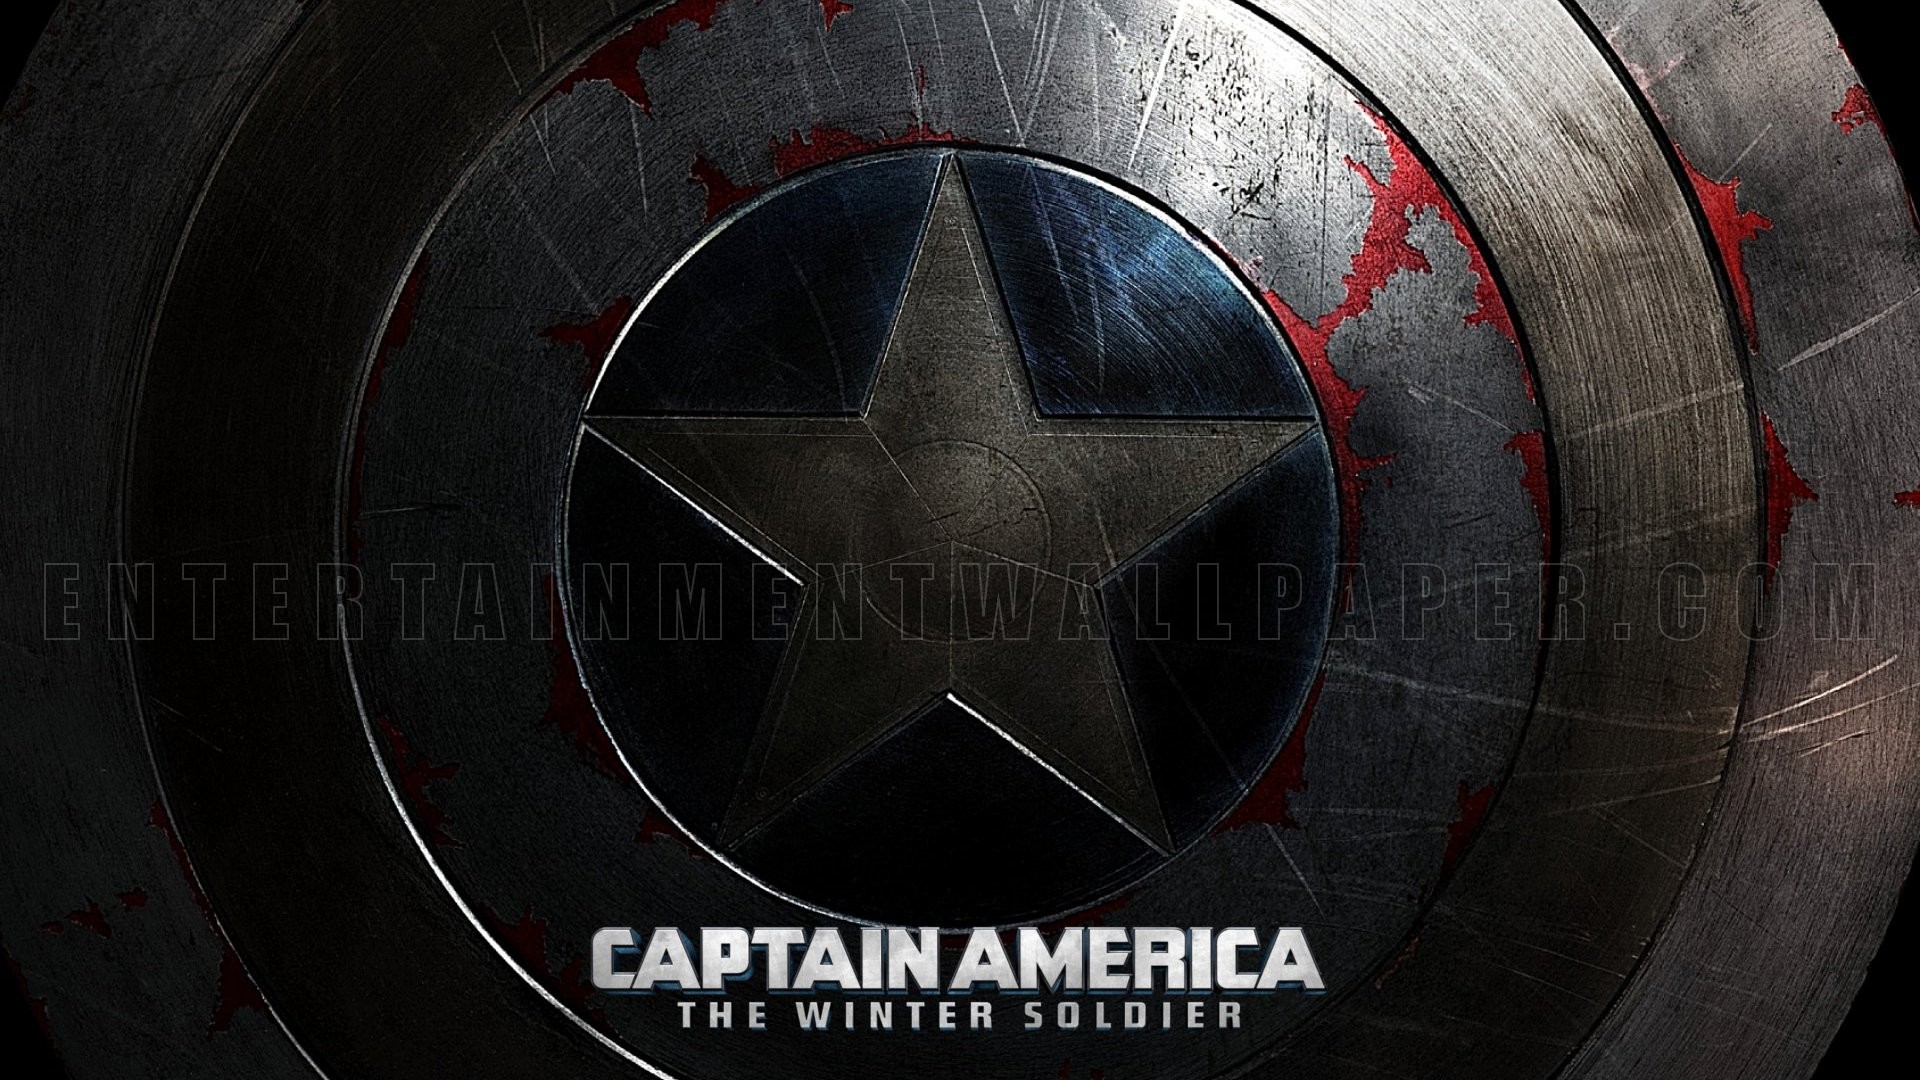 1920x1080 Captain America: The Winter Soldier Wallpaper - Original size, download now.